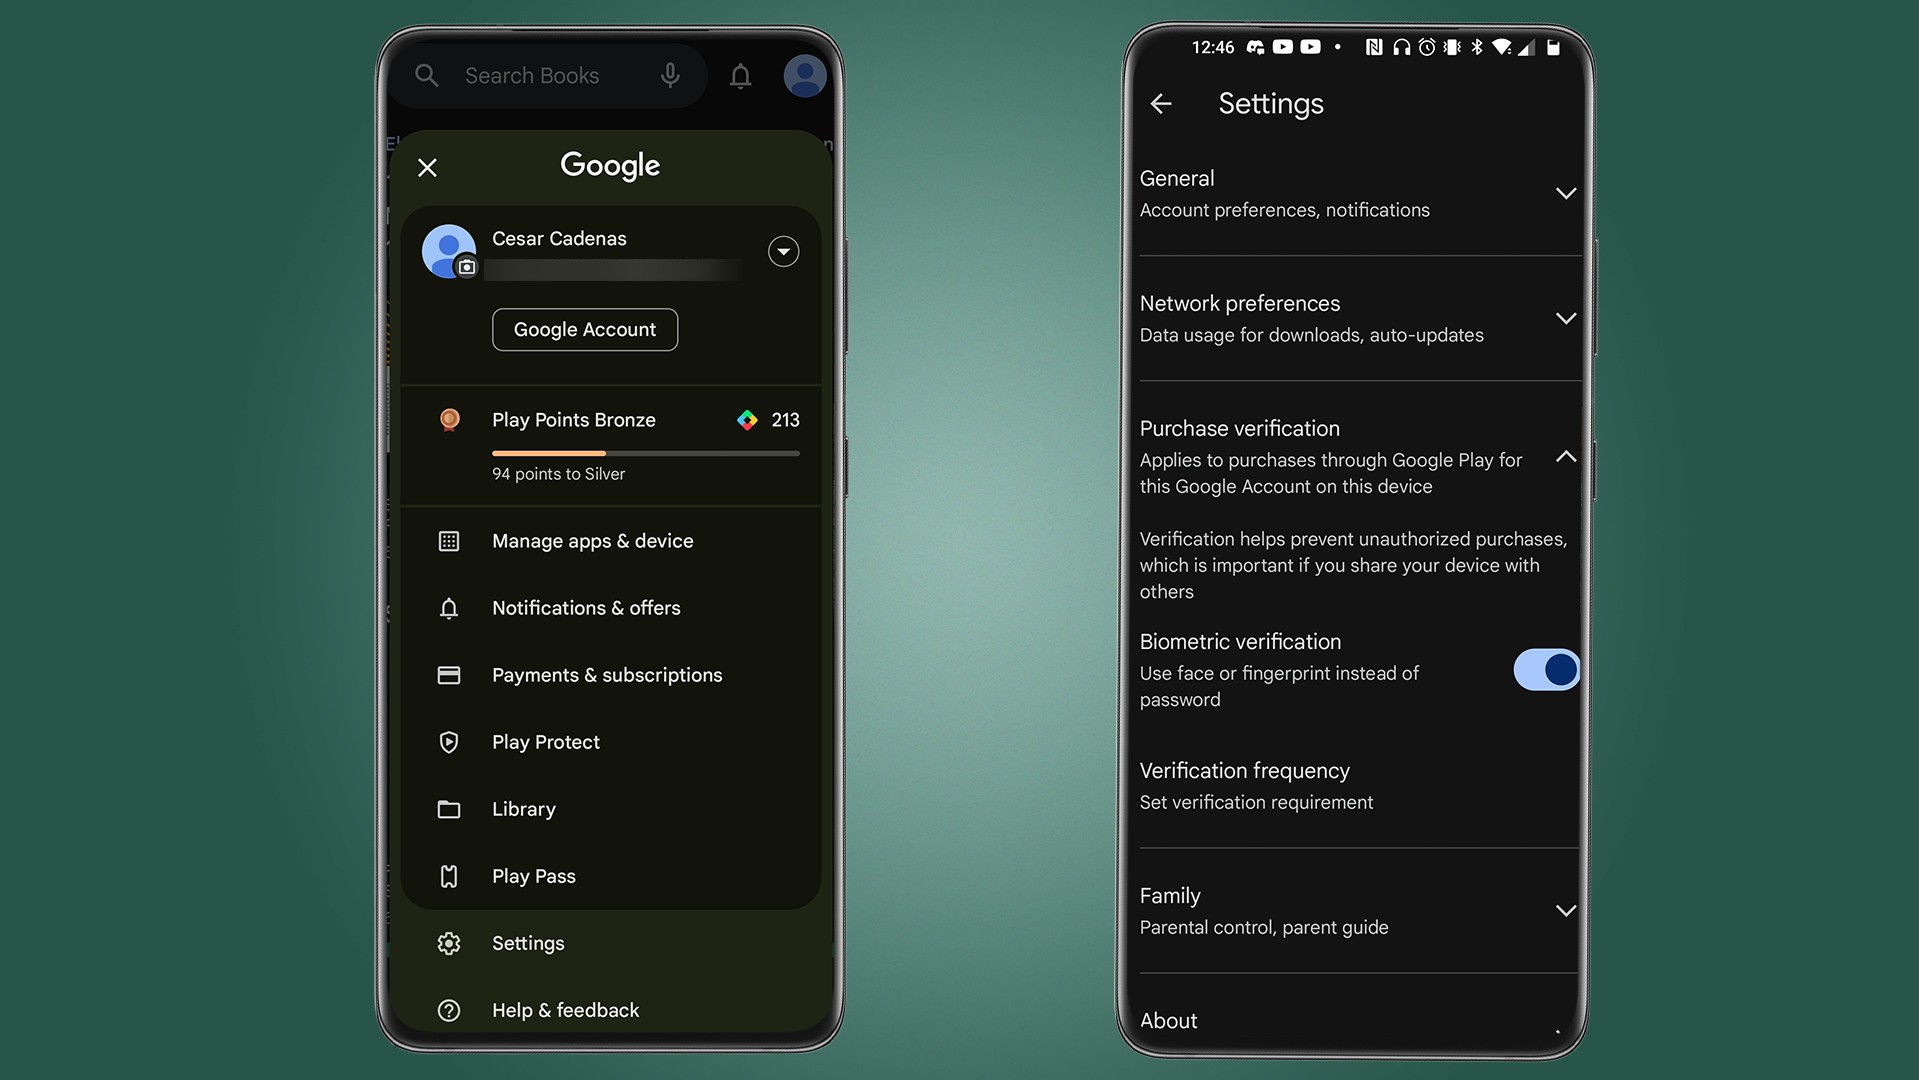 Google Play Store's new biometric verification